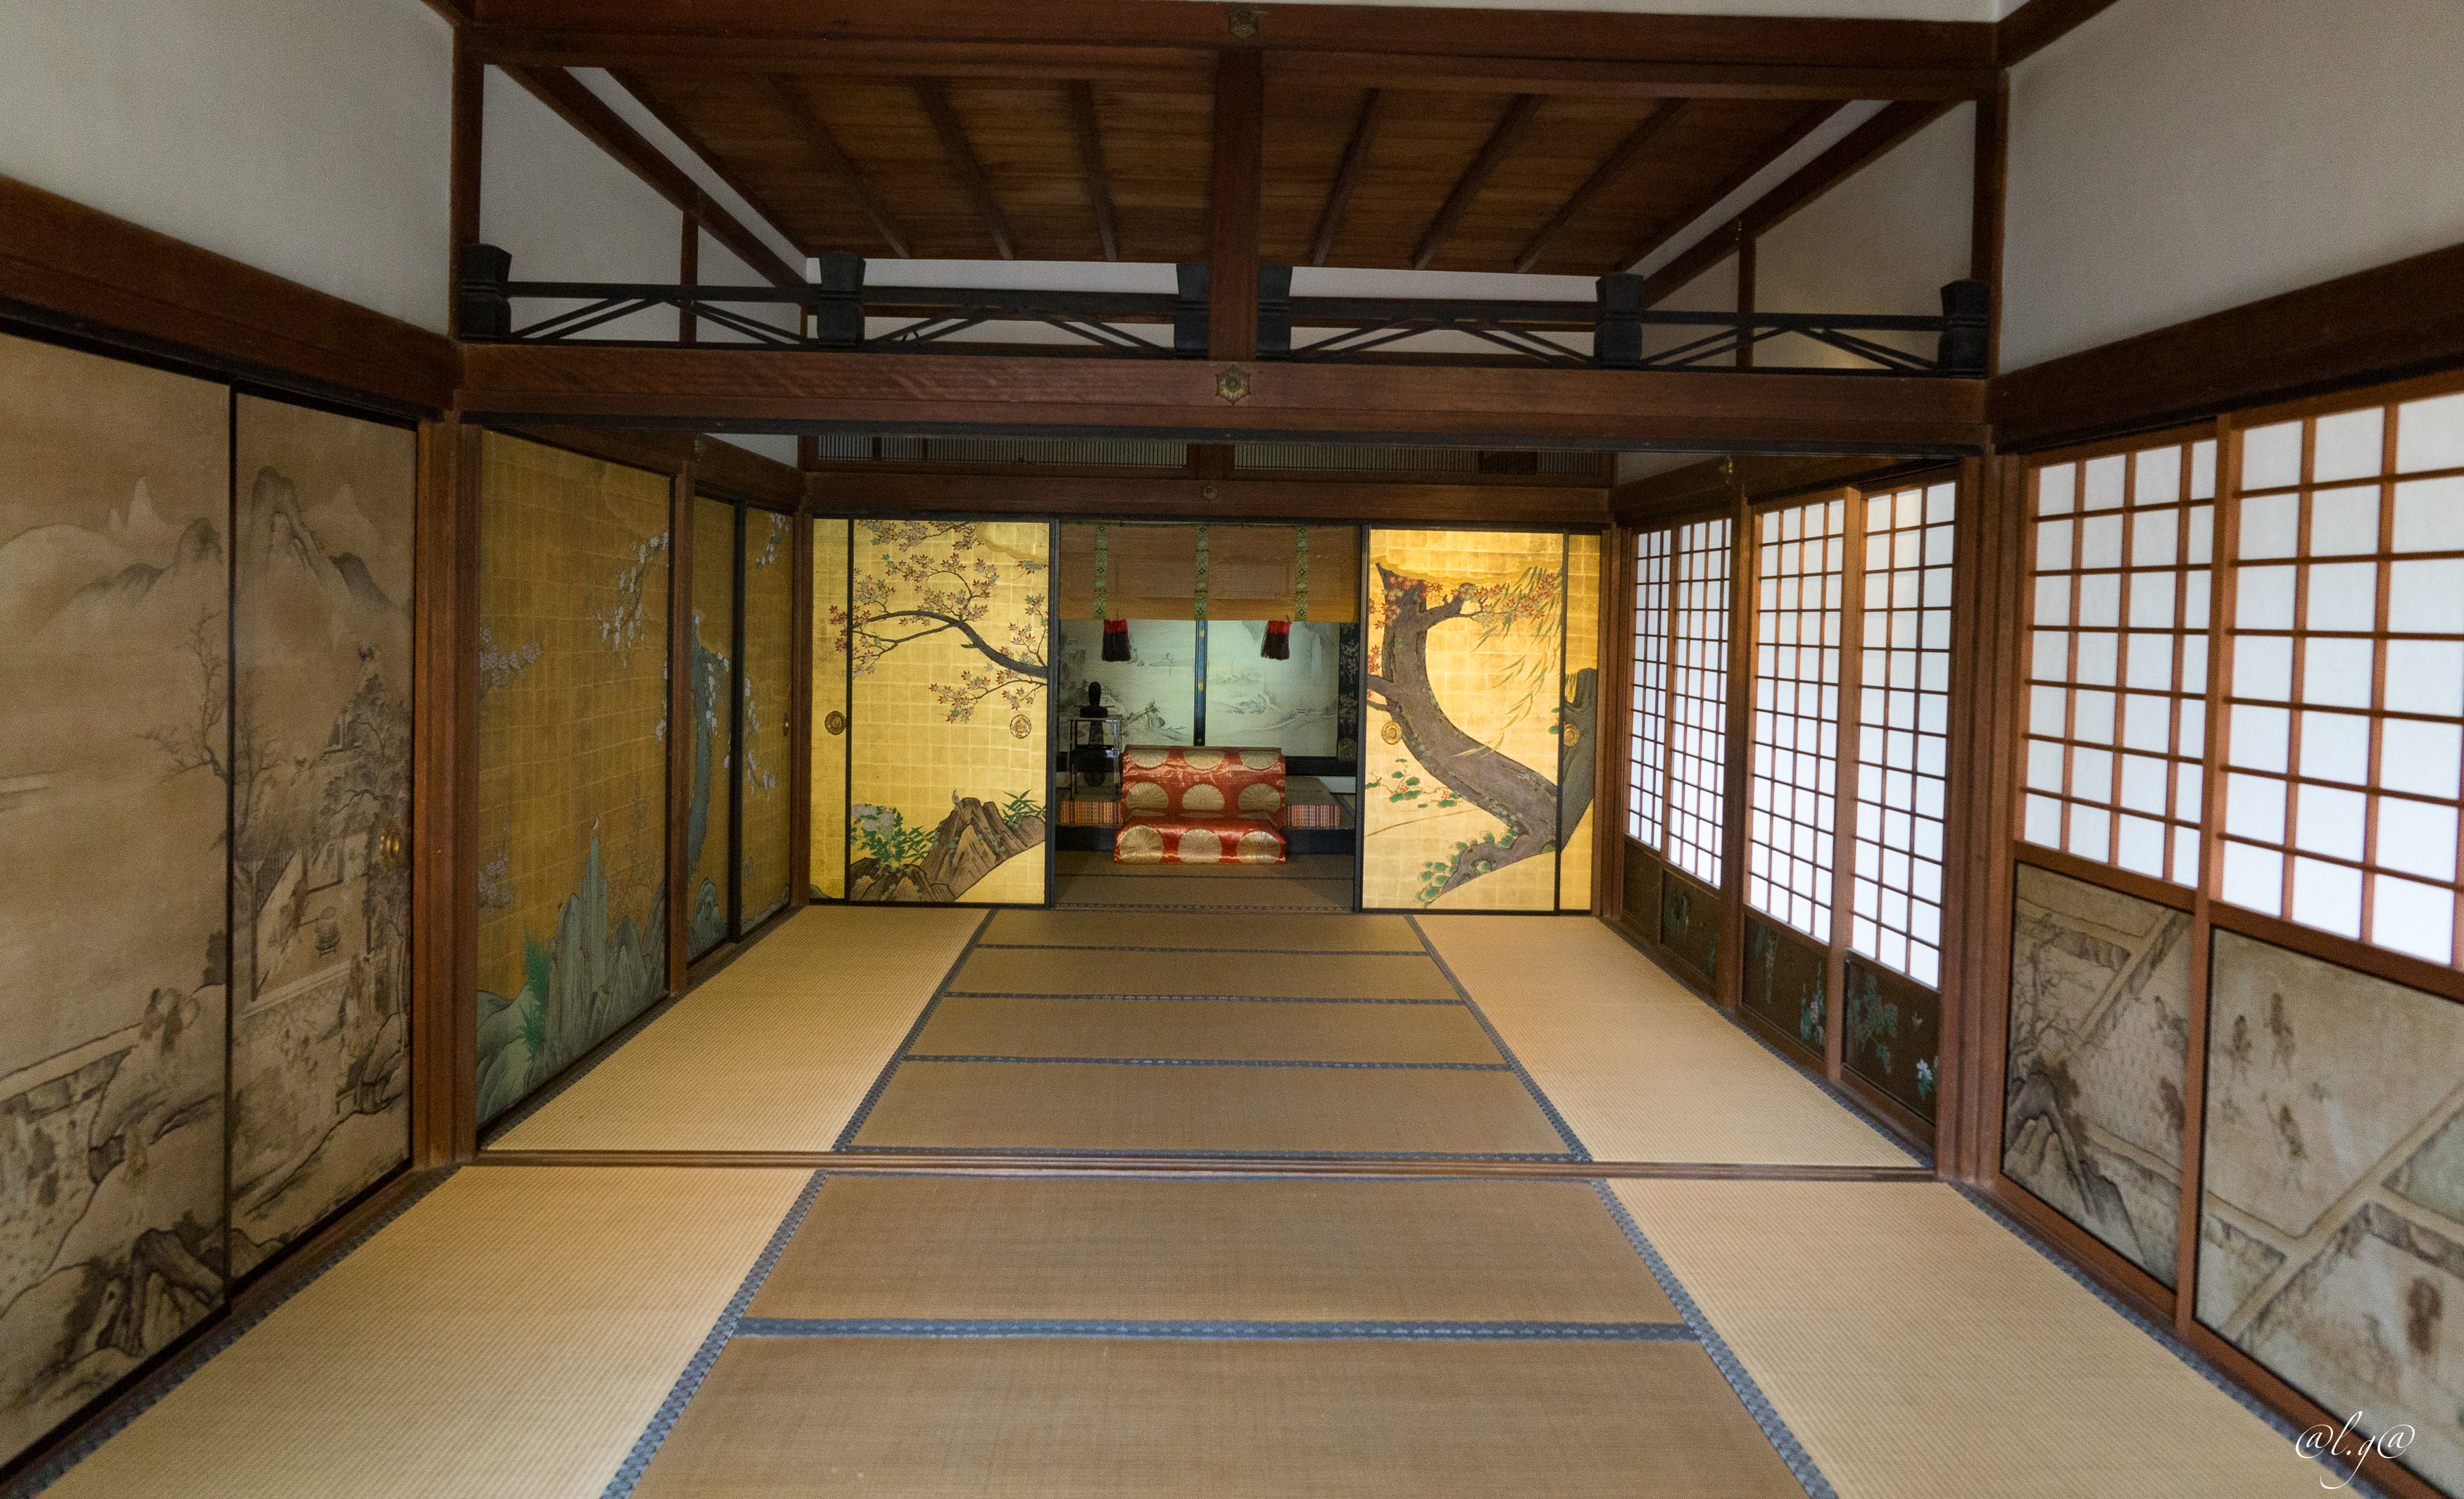 Kyoto : Le temple Daikoku-ji et son jardin